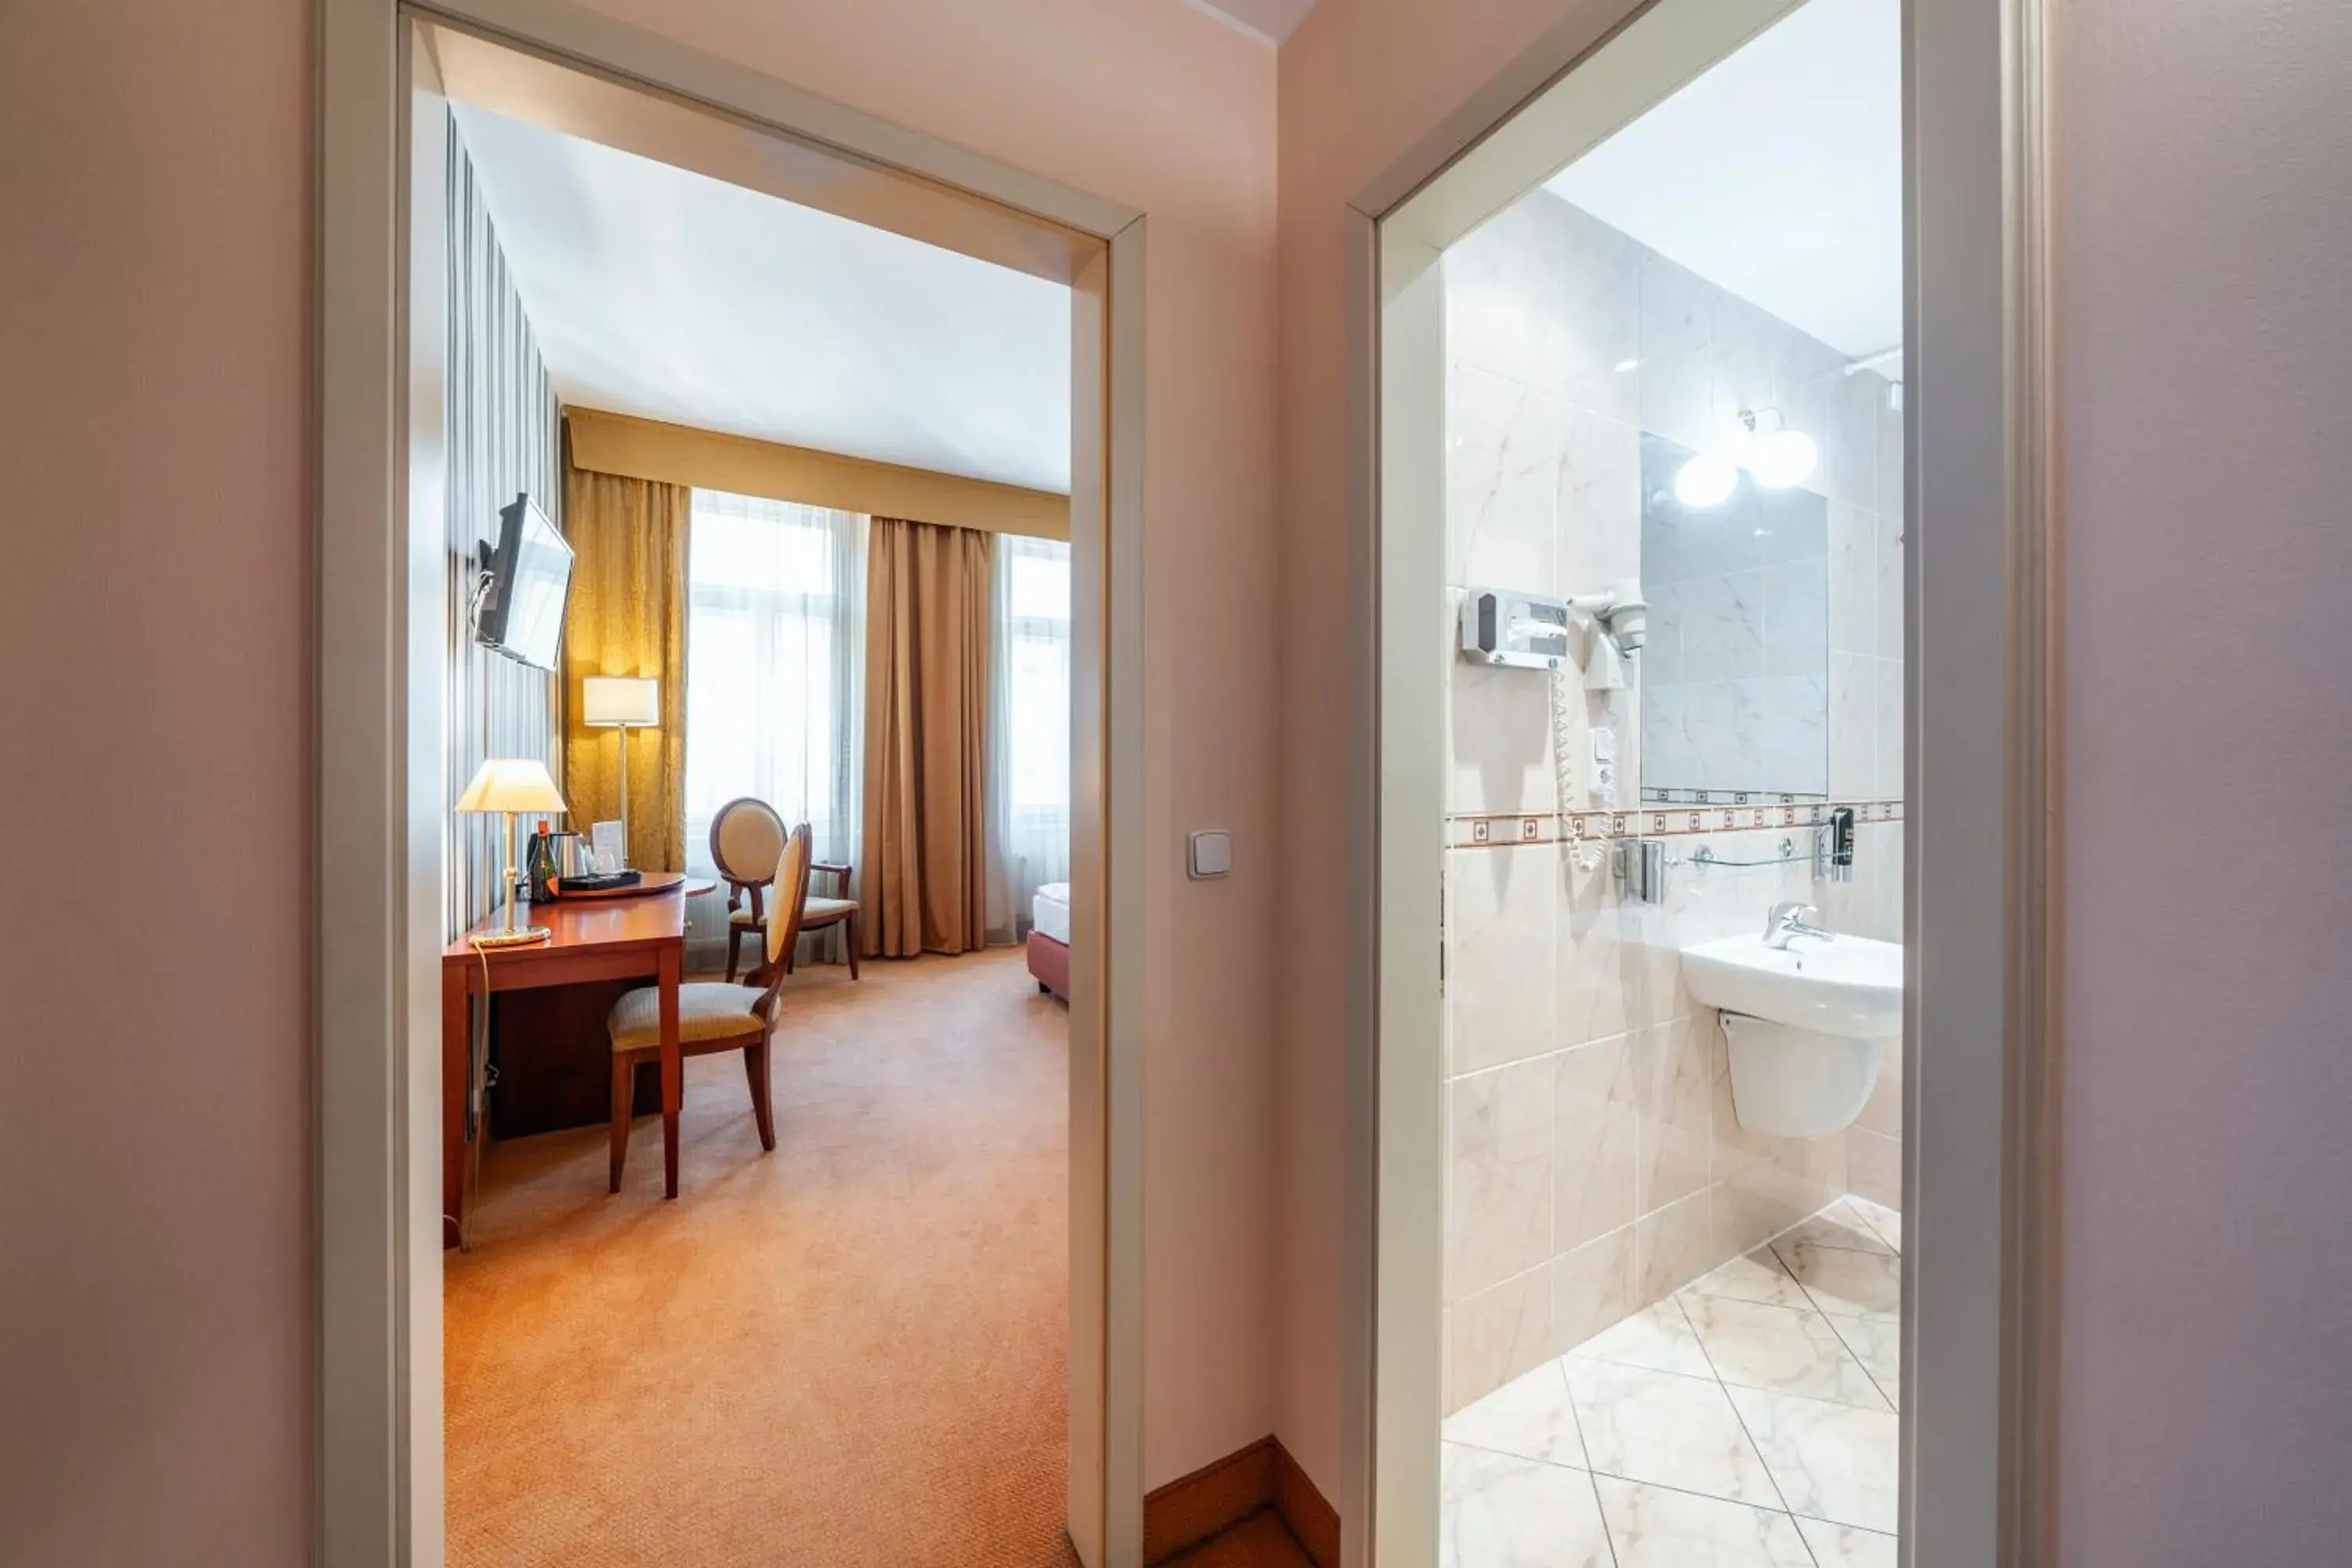 Photo of the whole room, Bathroom in Hotel Raffaello